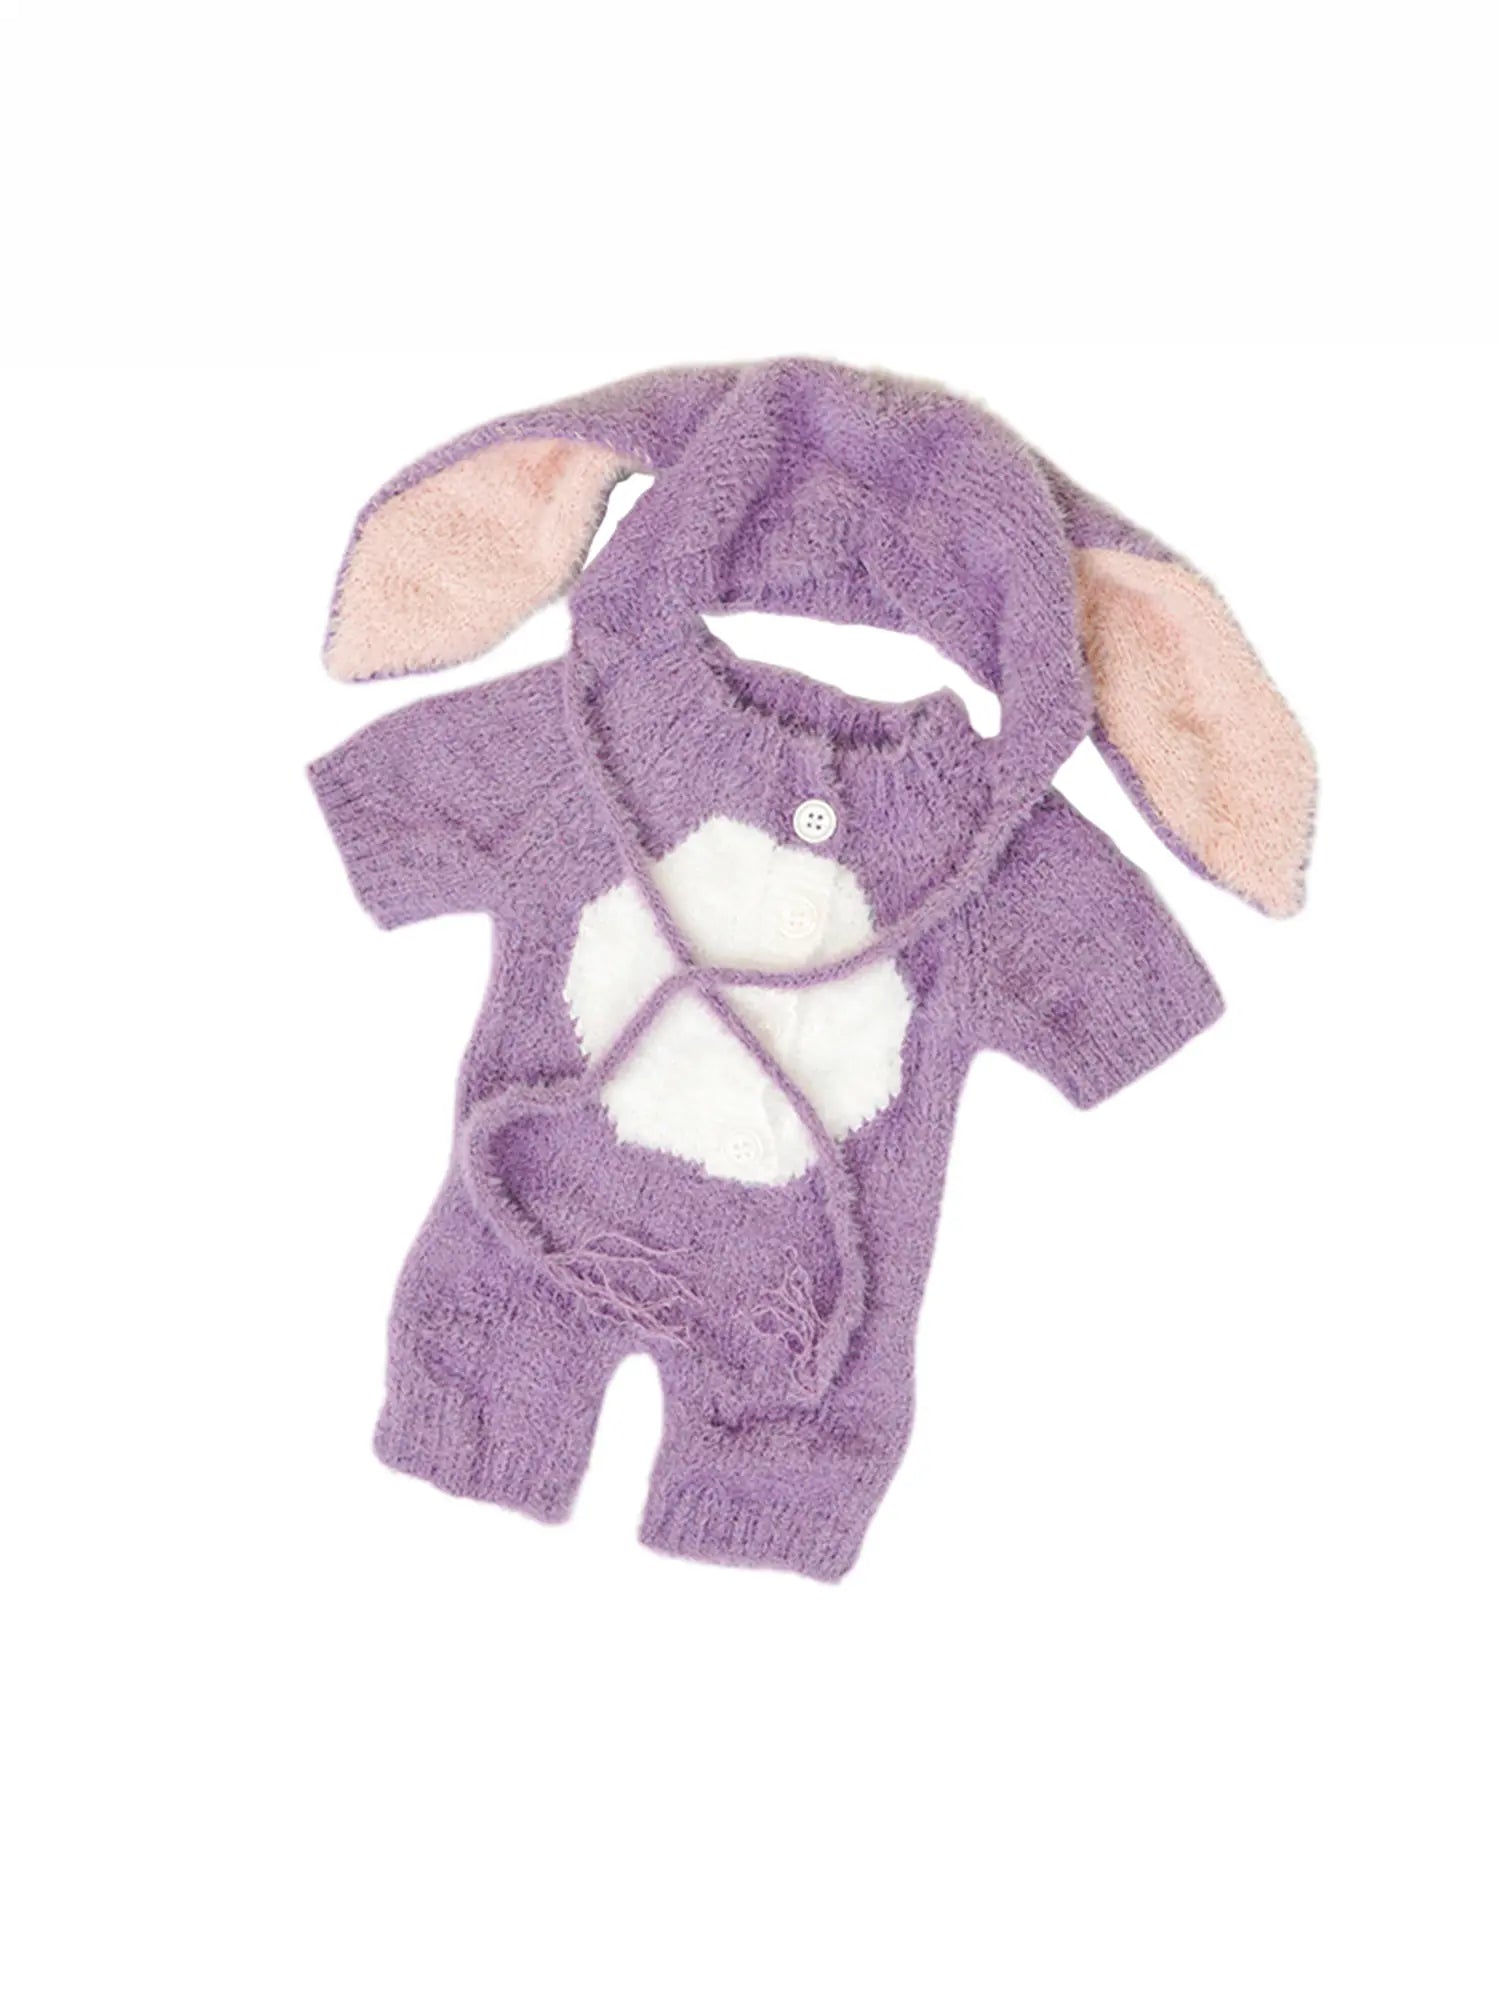 Purple Plush Reborn Doll Clothing